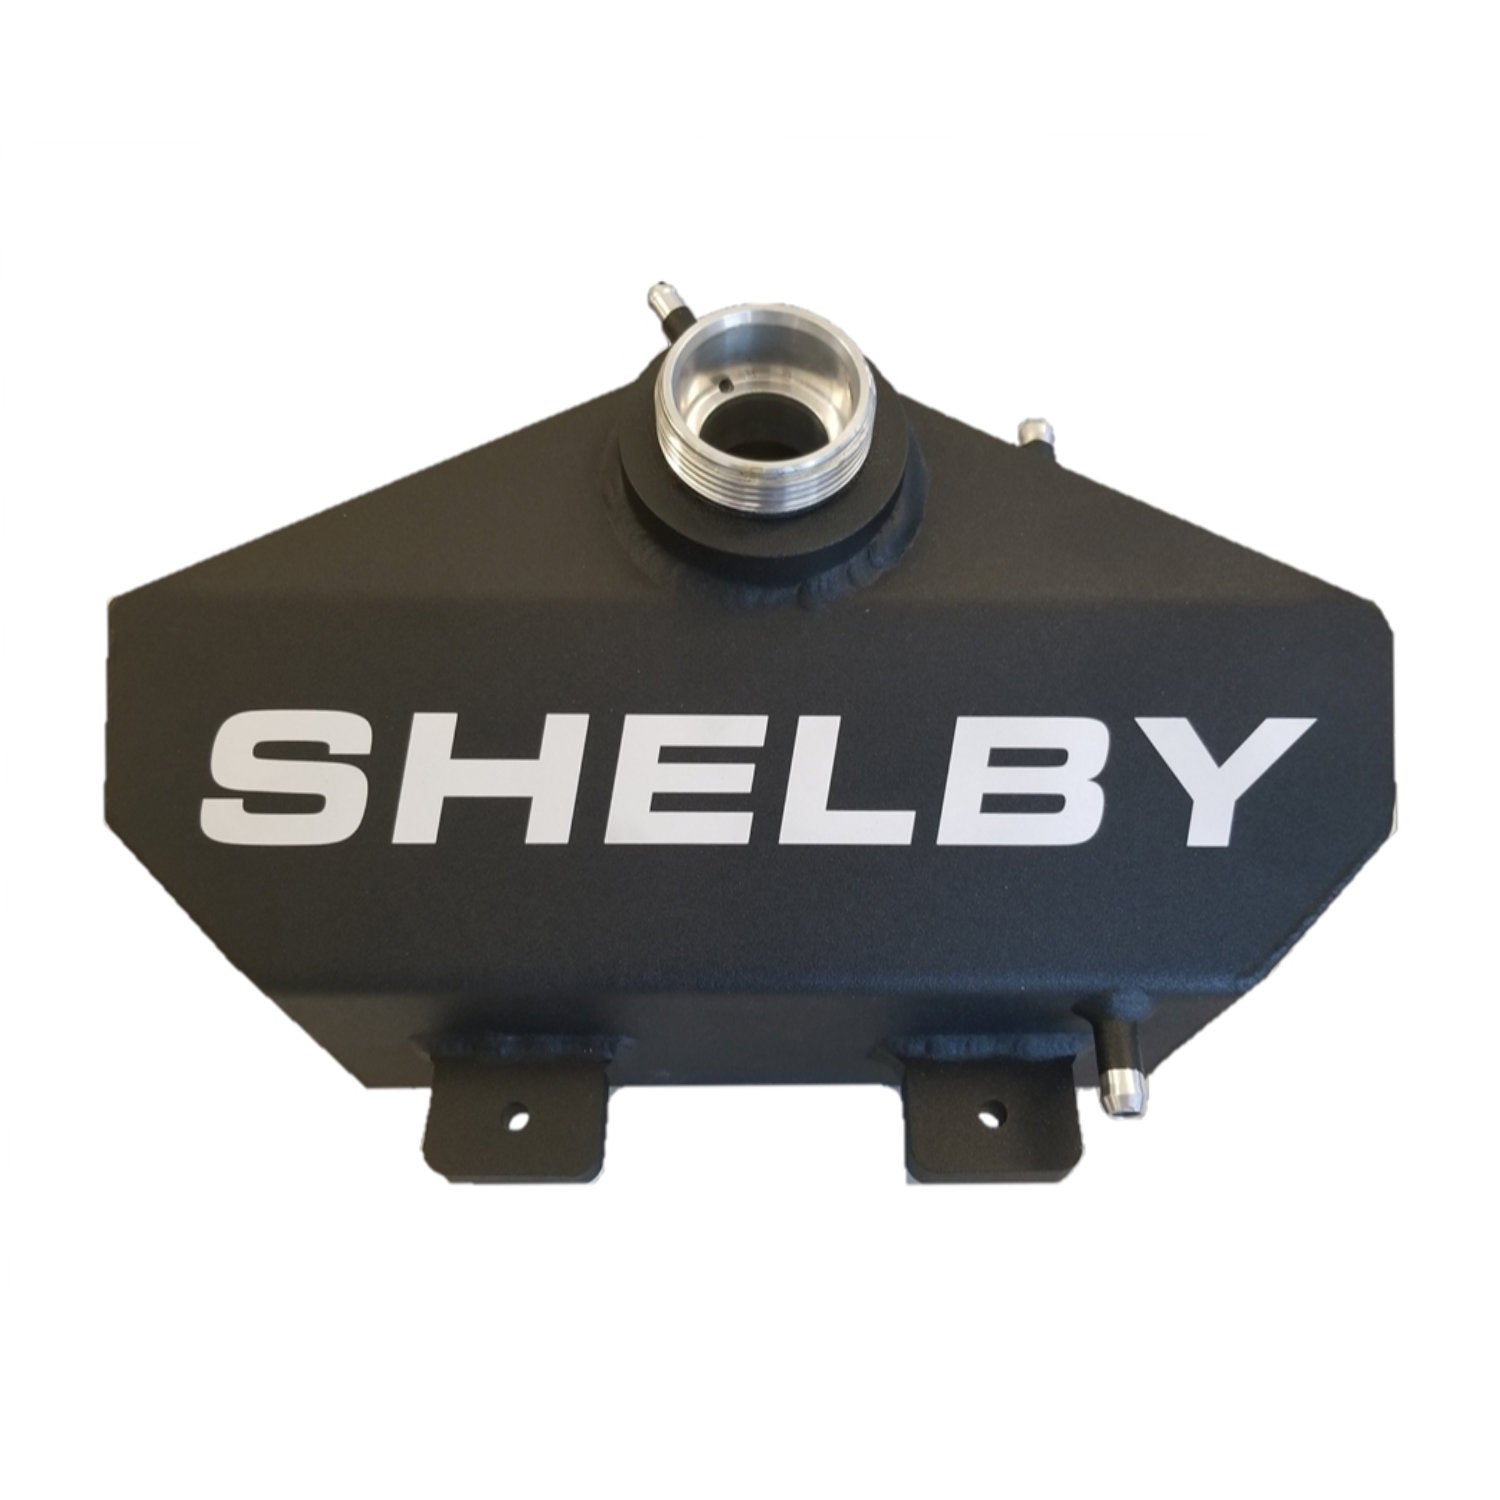 Shelby 2015-23 Coolant Reservoir Tank - Black